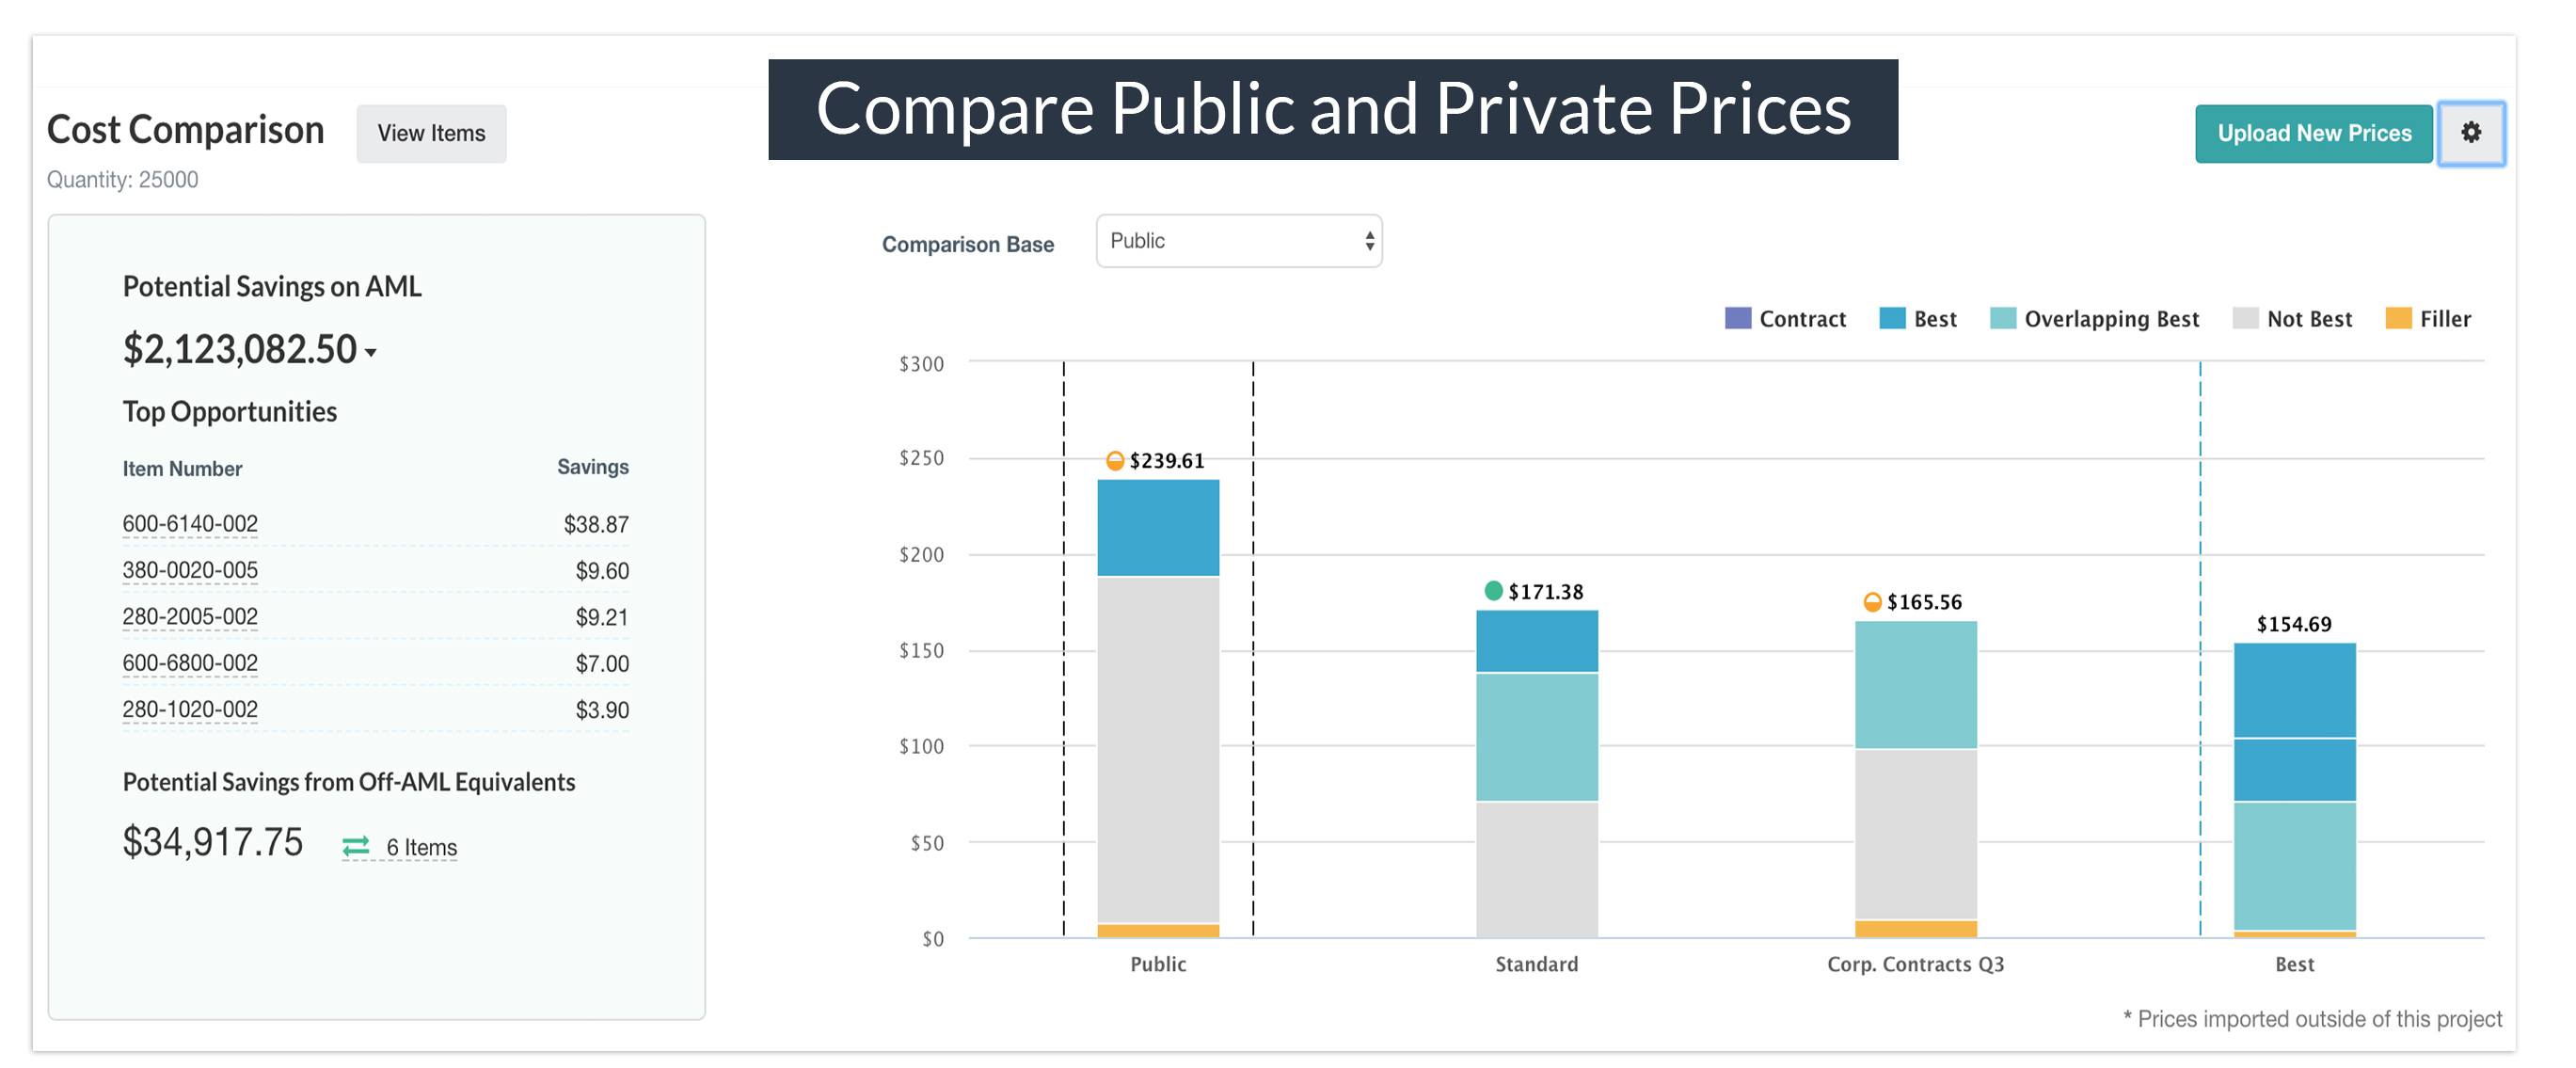 Compare Public and Private Prices Screenshots